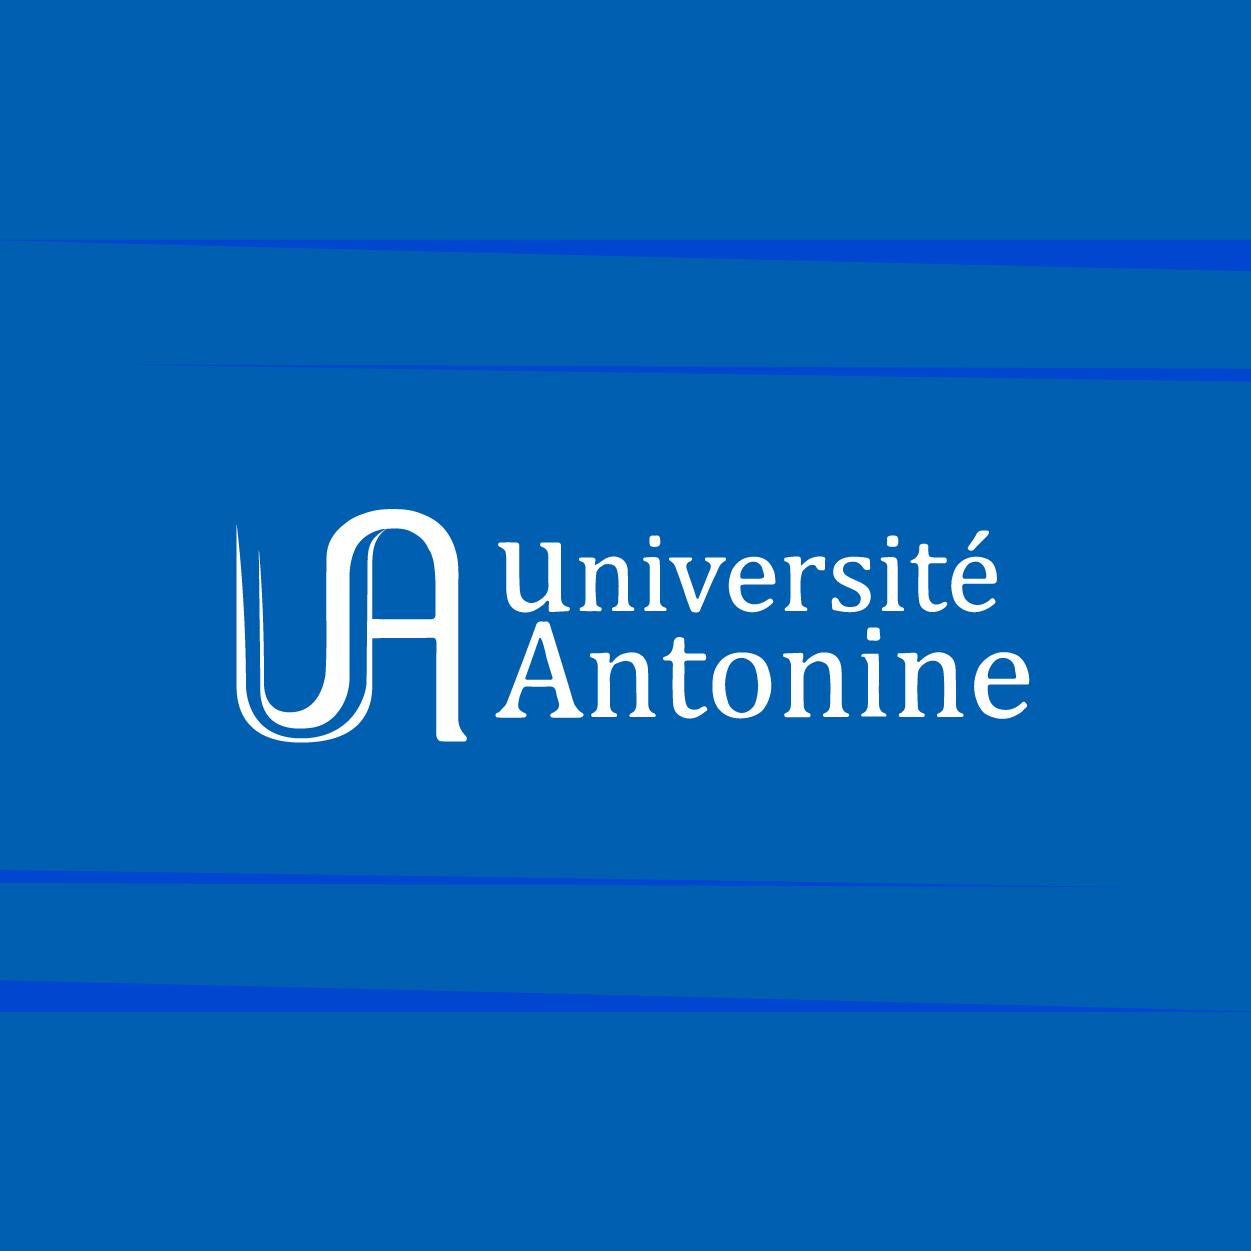 Domuni and the Antonine University in partnership